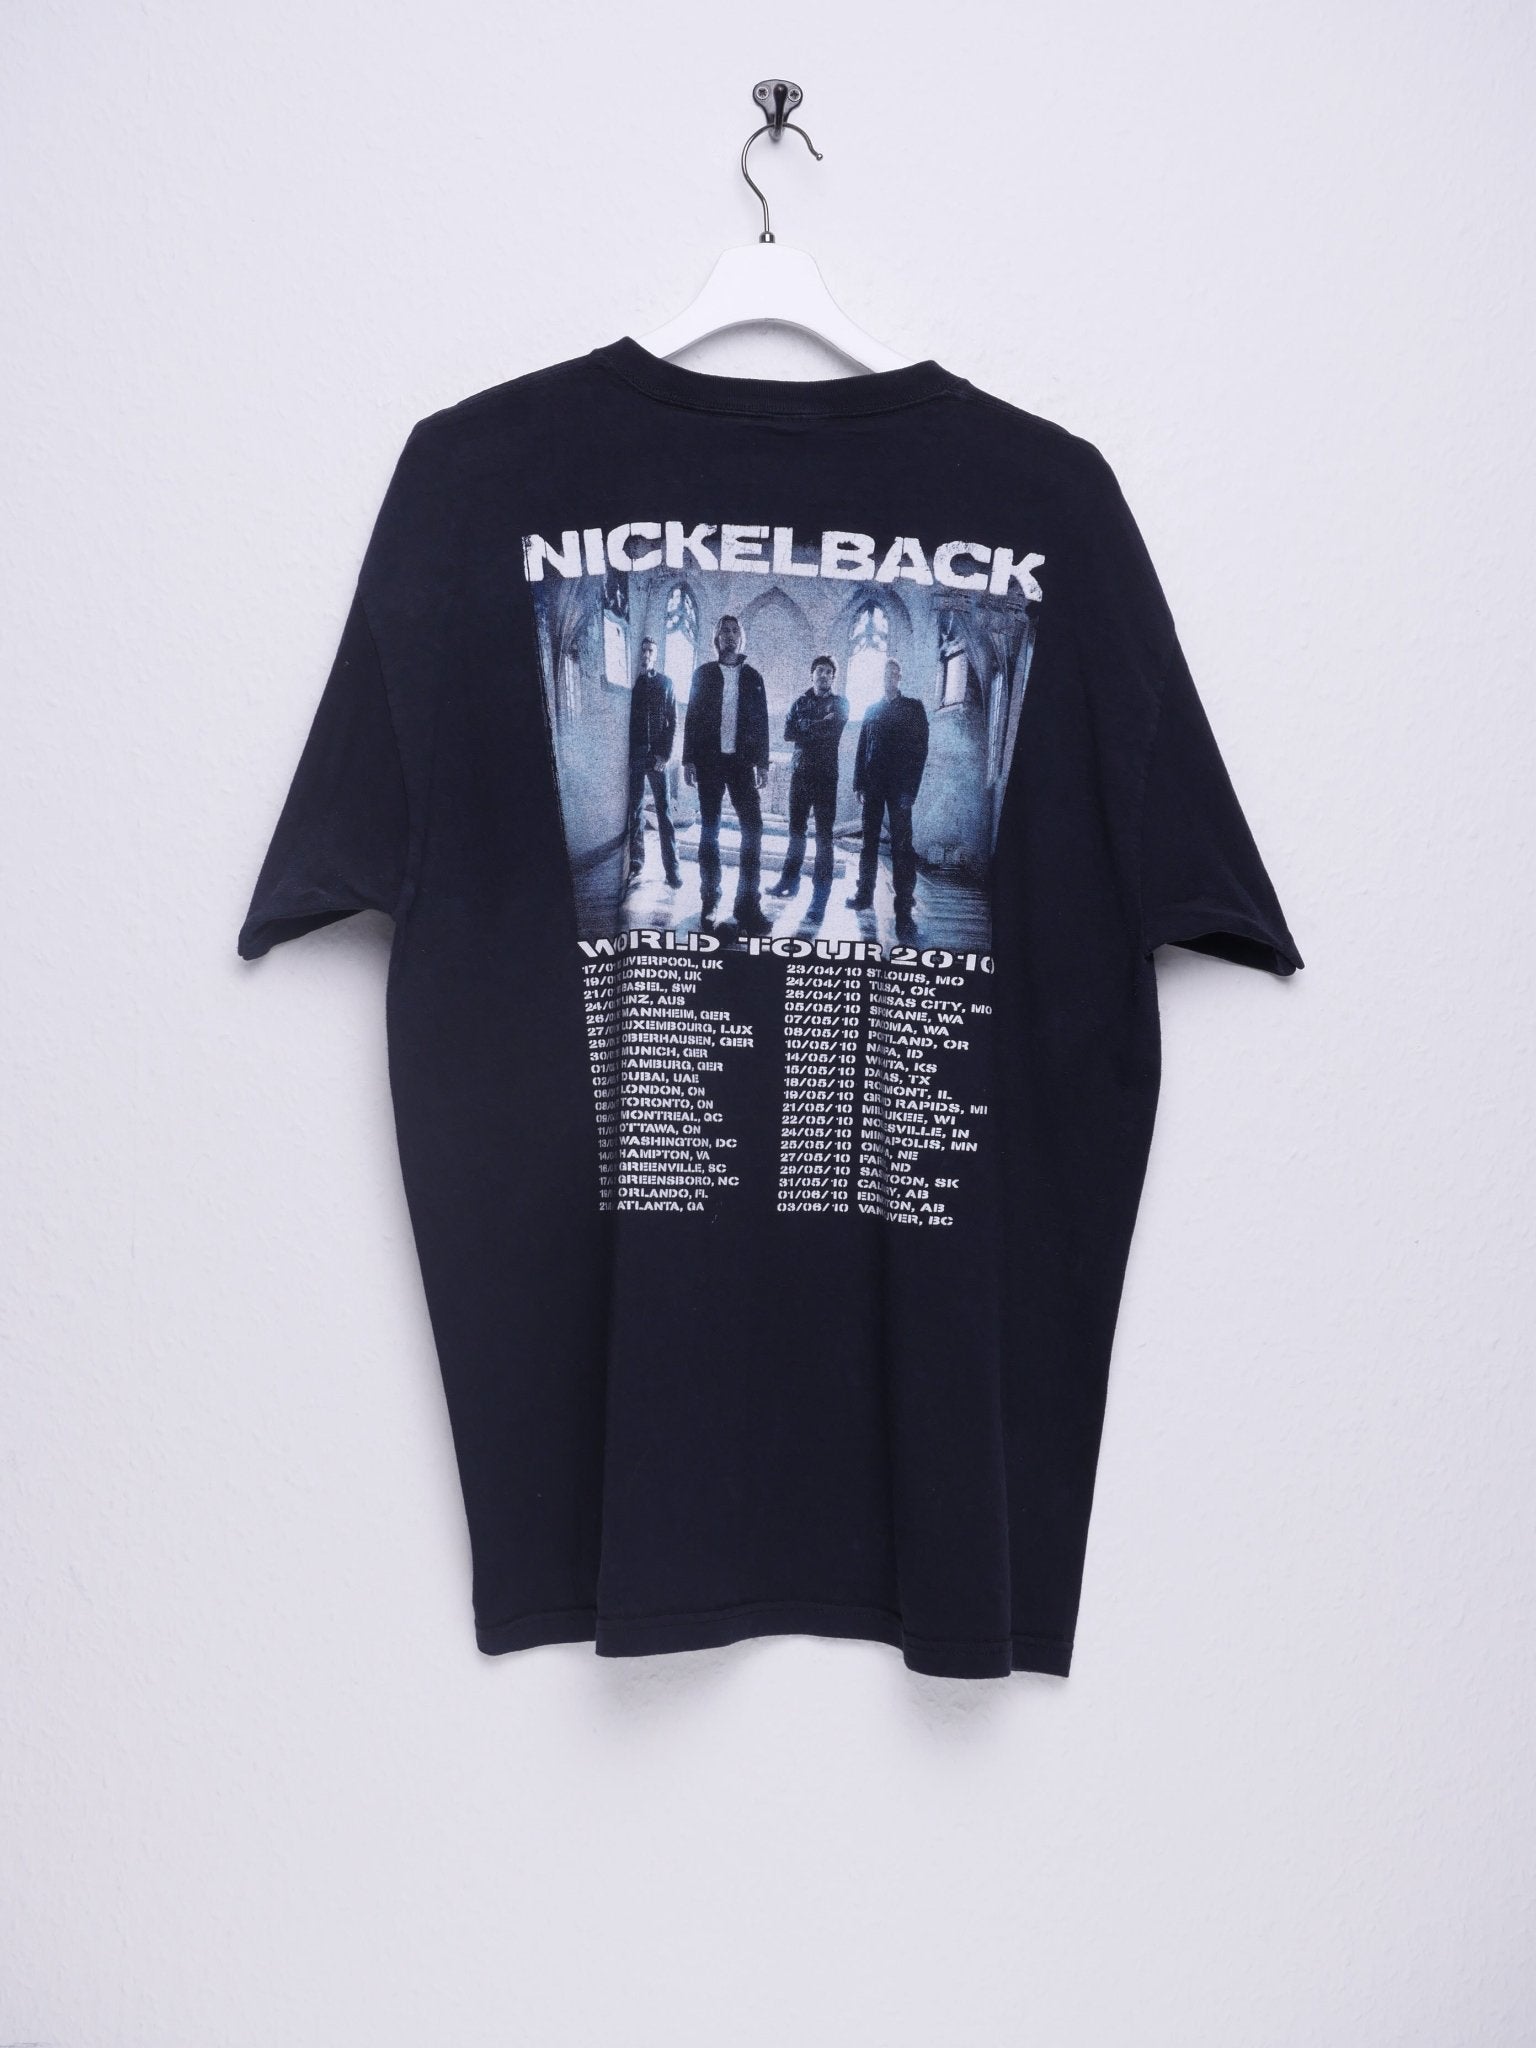 Nickelback printed Graphic black Shirt - Peeces